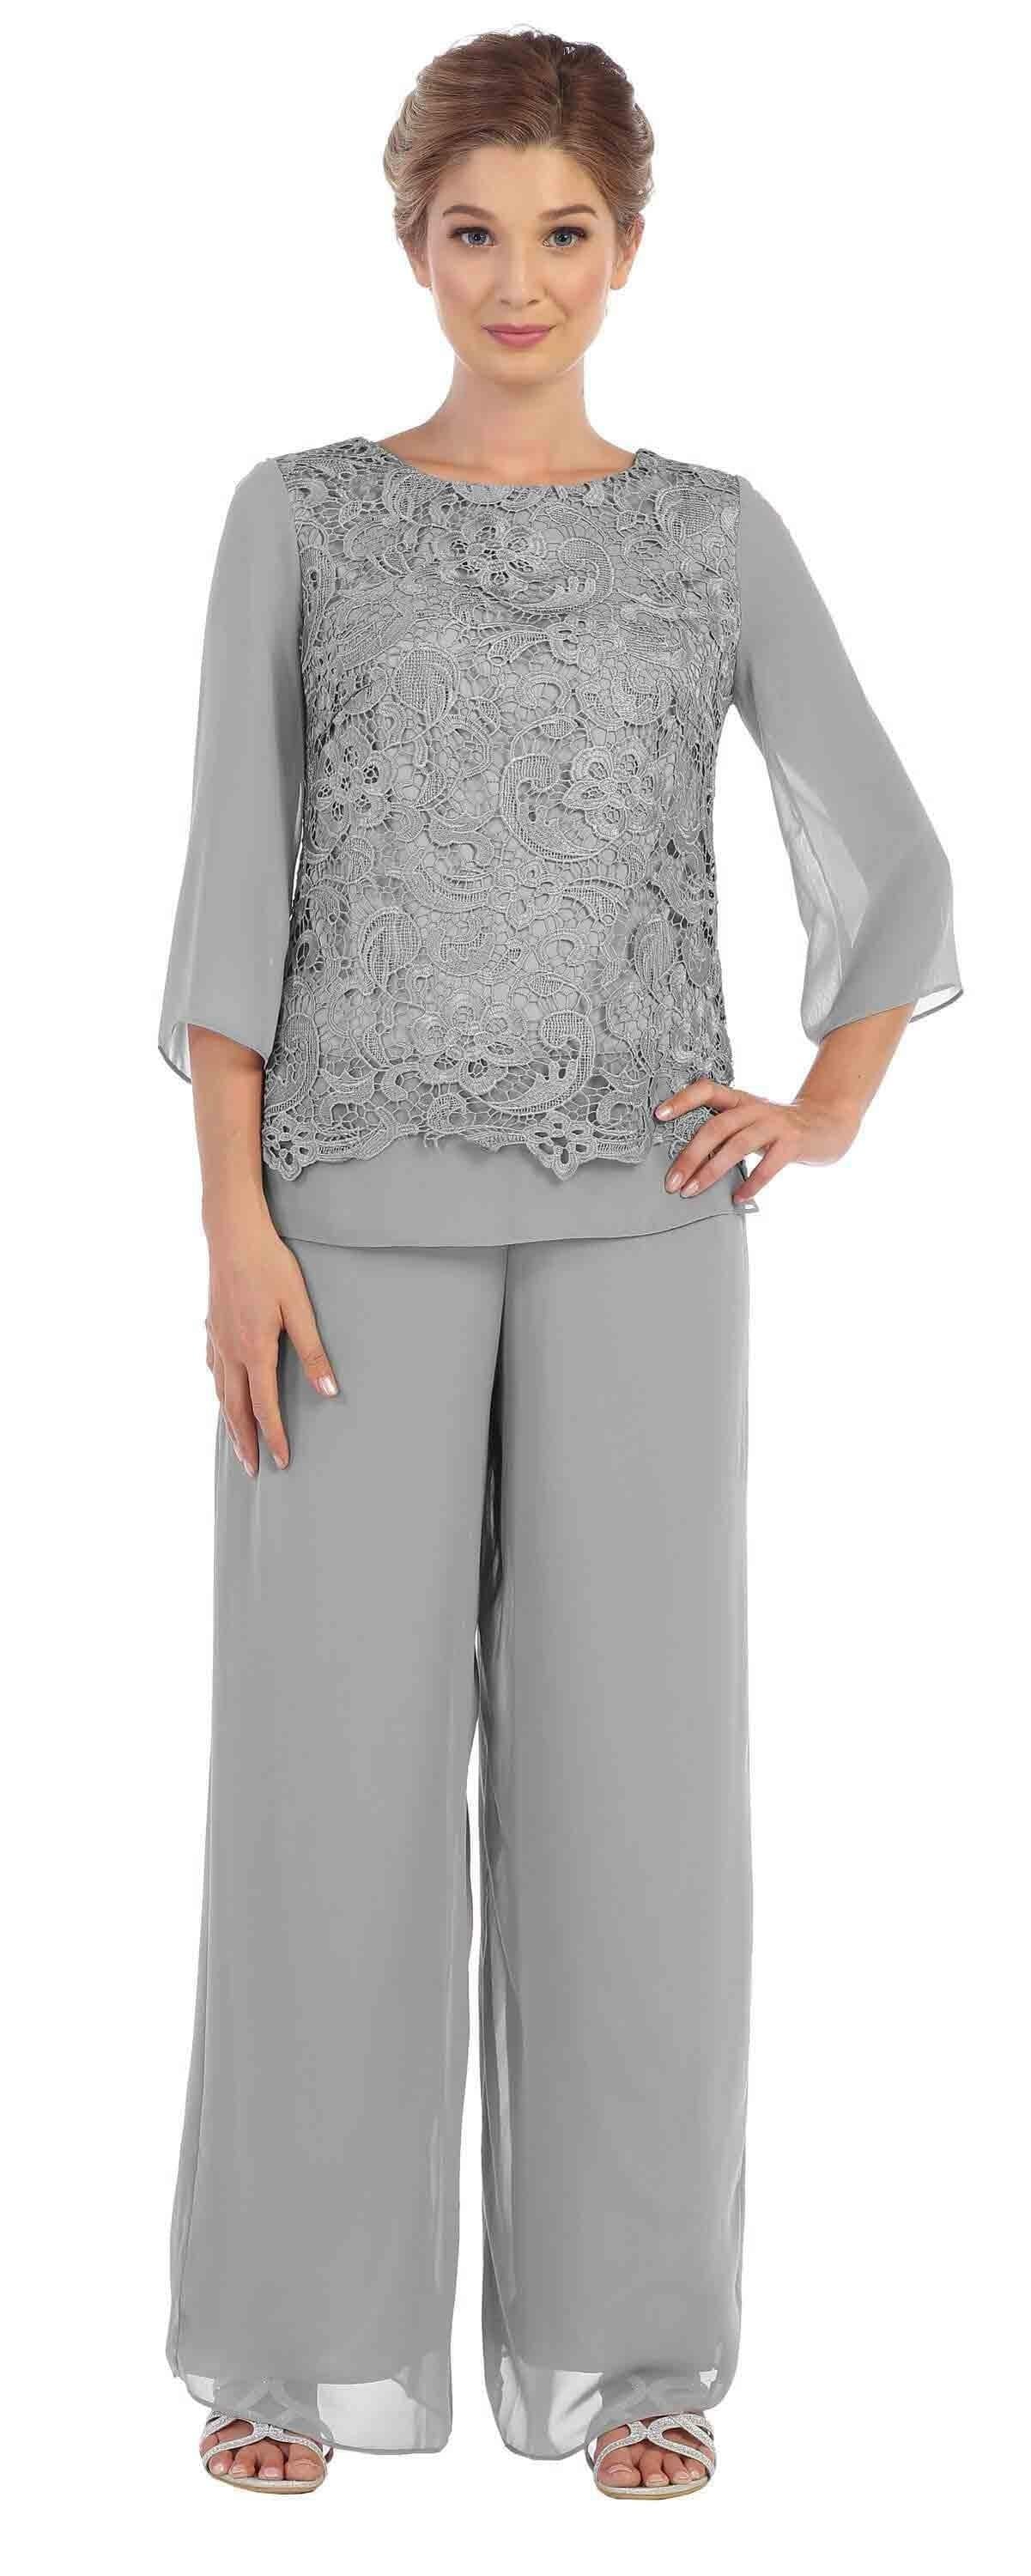 Formal 2 Piece Mother of the Bride Lace Pant Suit Sale - The Dress Outlet